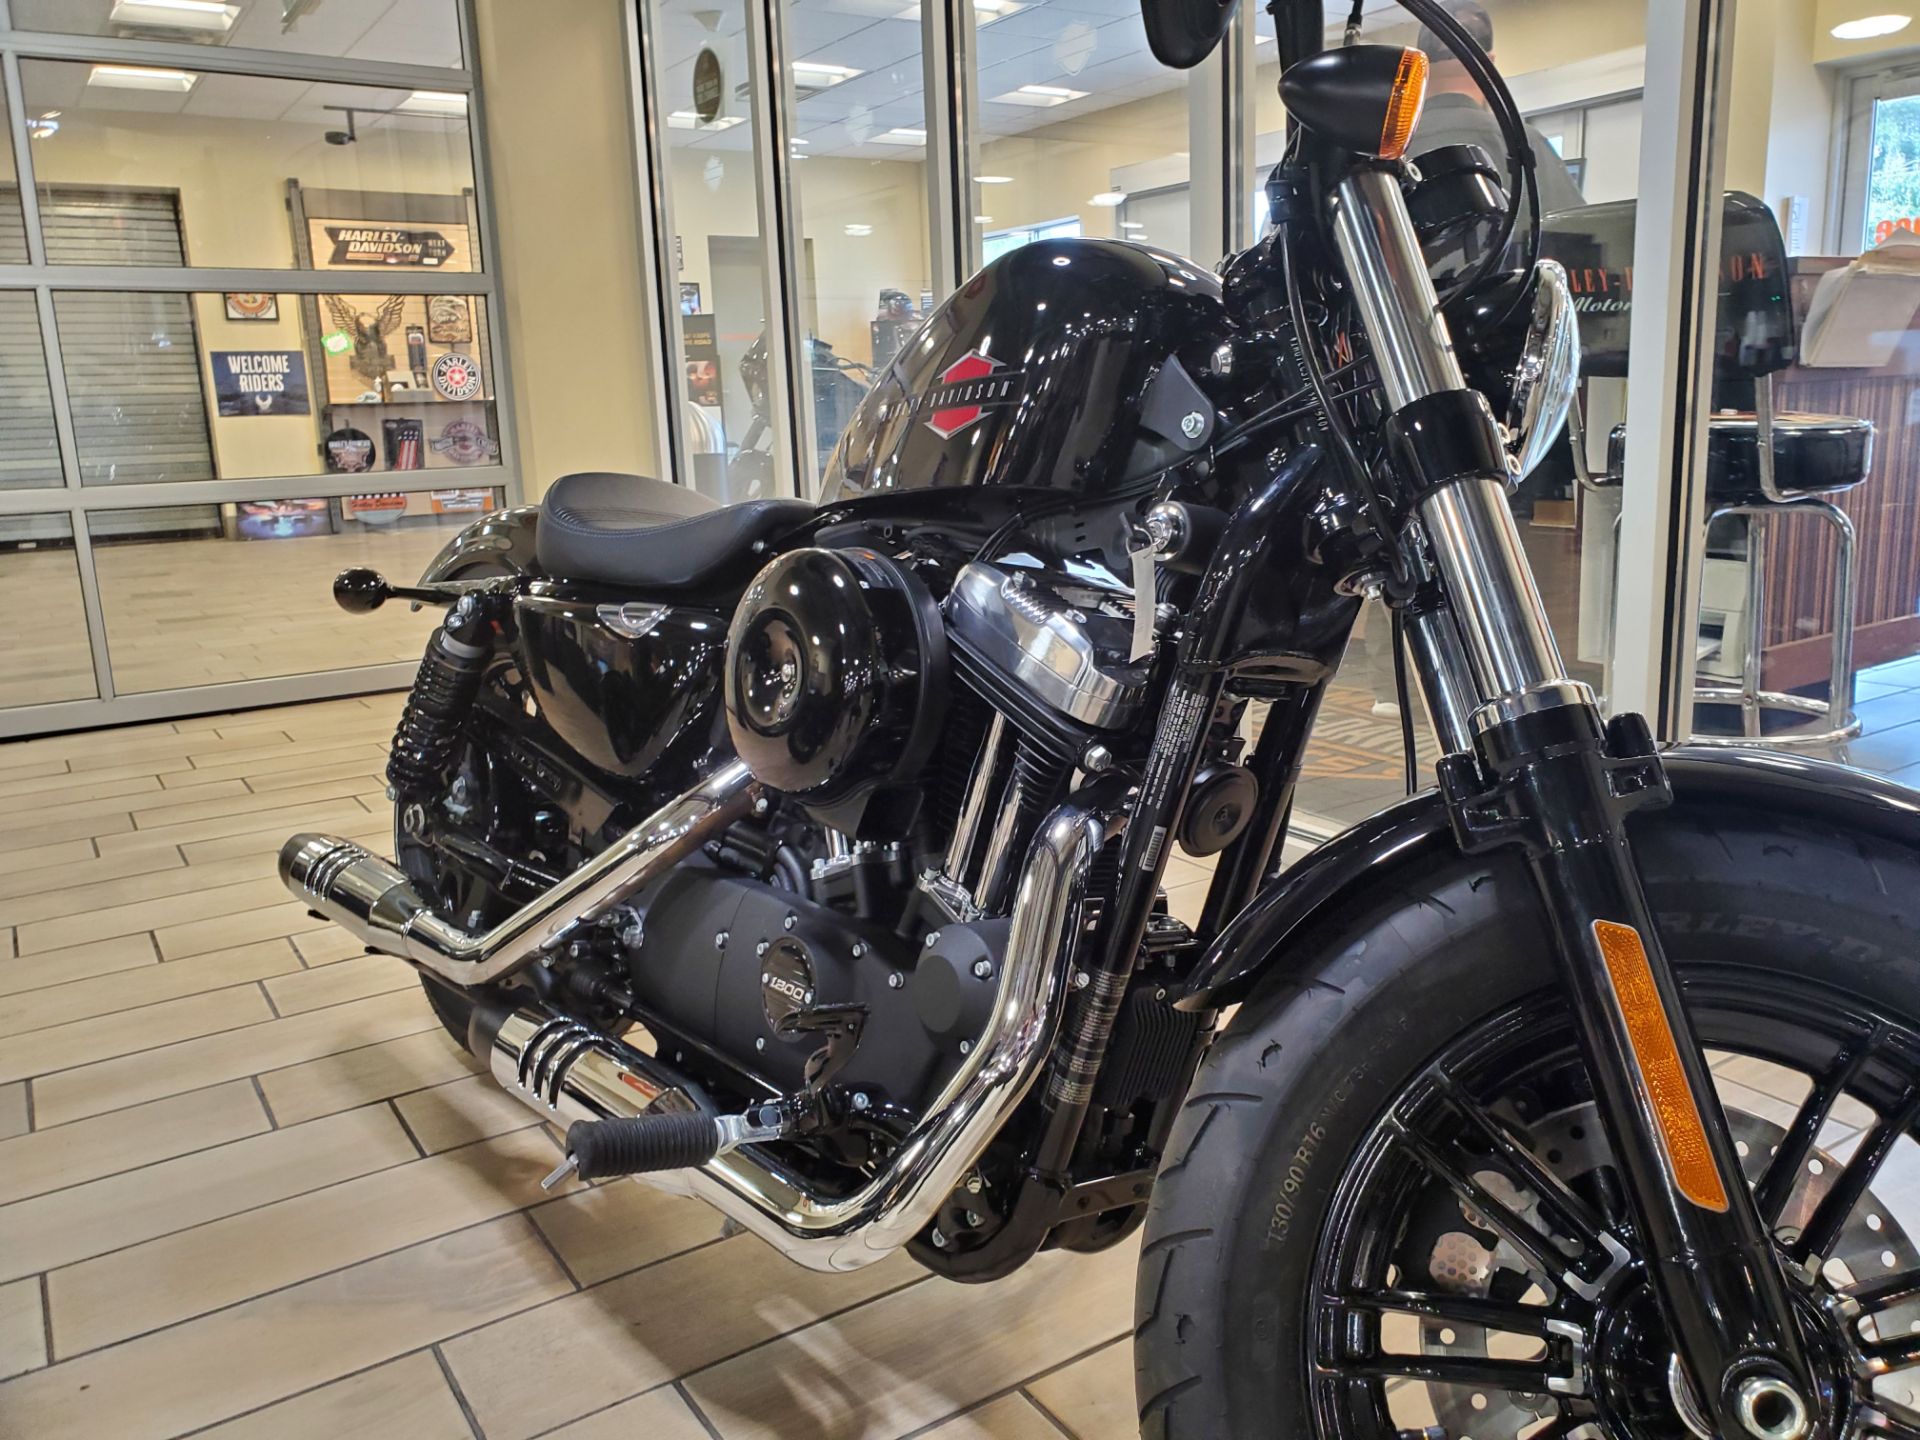 2022 Harley-Davidson Forty-Eight® in Riverdale, Utah - Photo 2